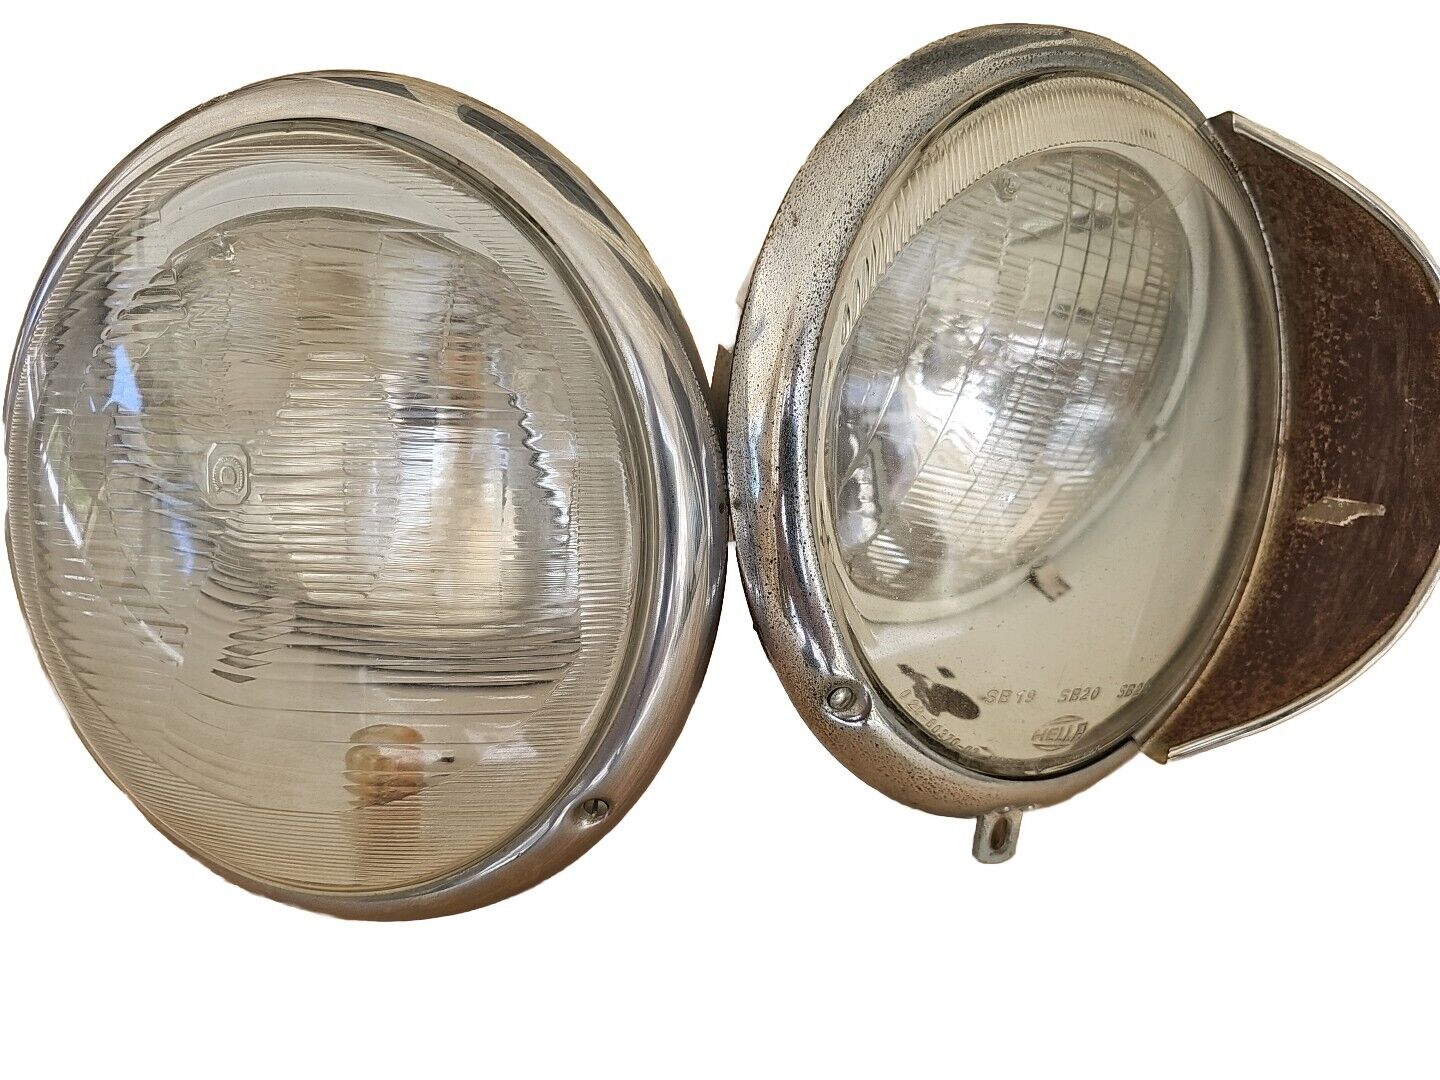  VW OEM Bug Beetle, Bus, Volkswagen 1960’s Headlight Lens, Assemble pair